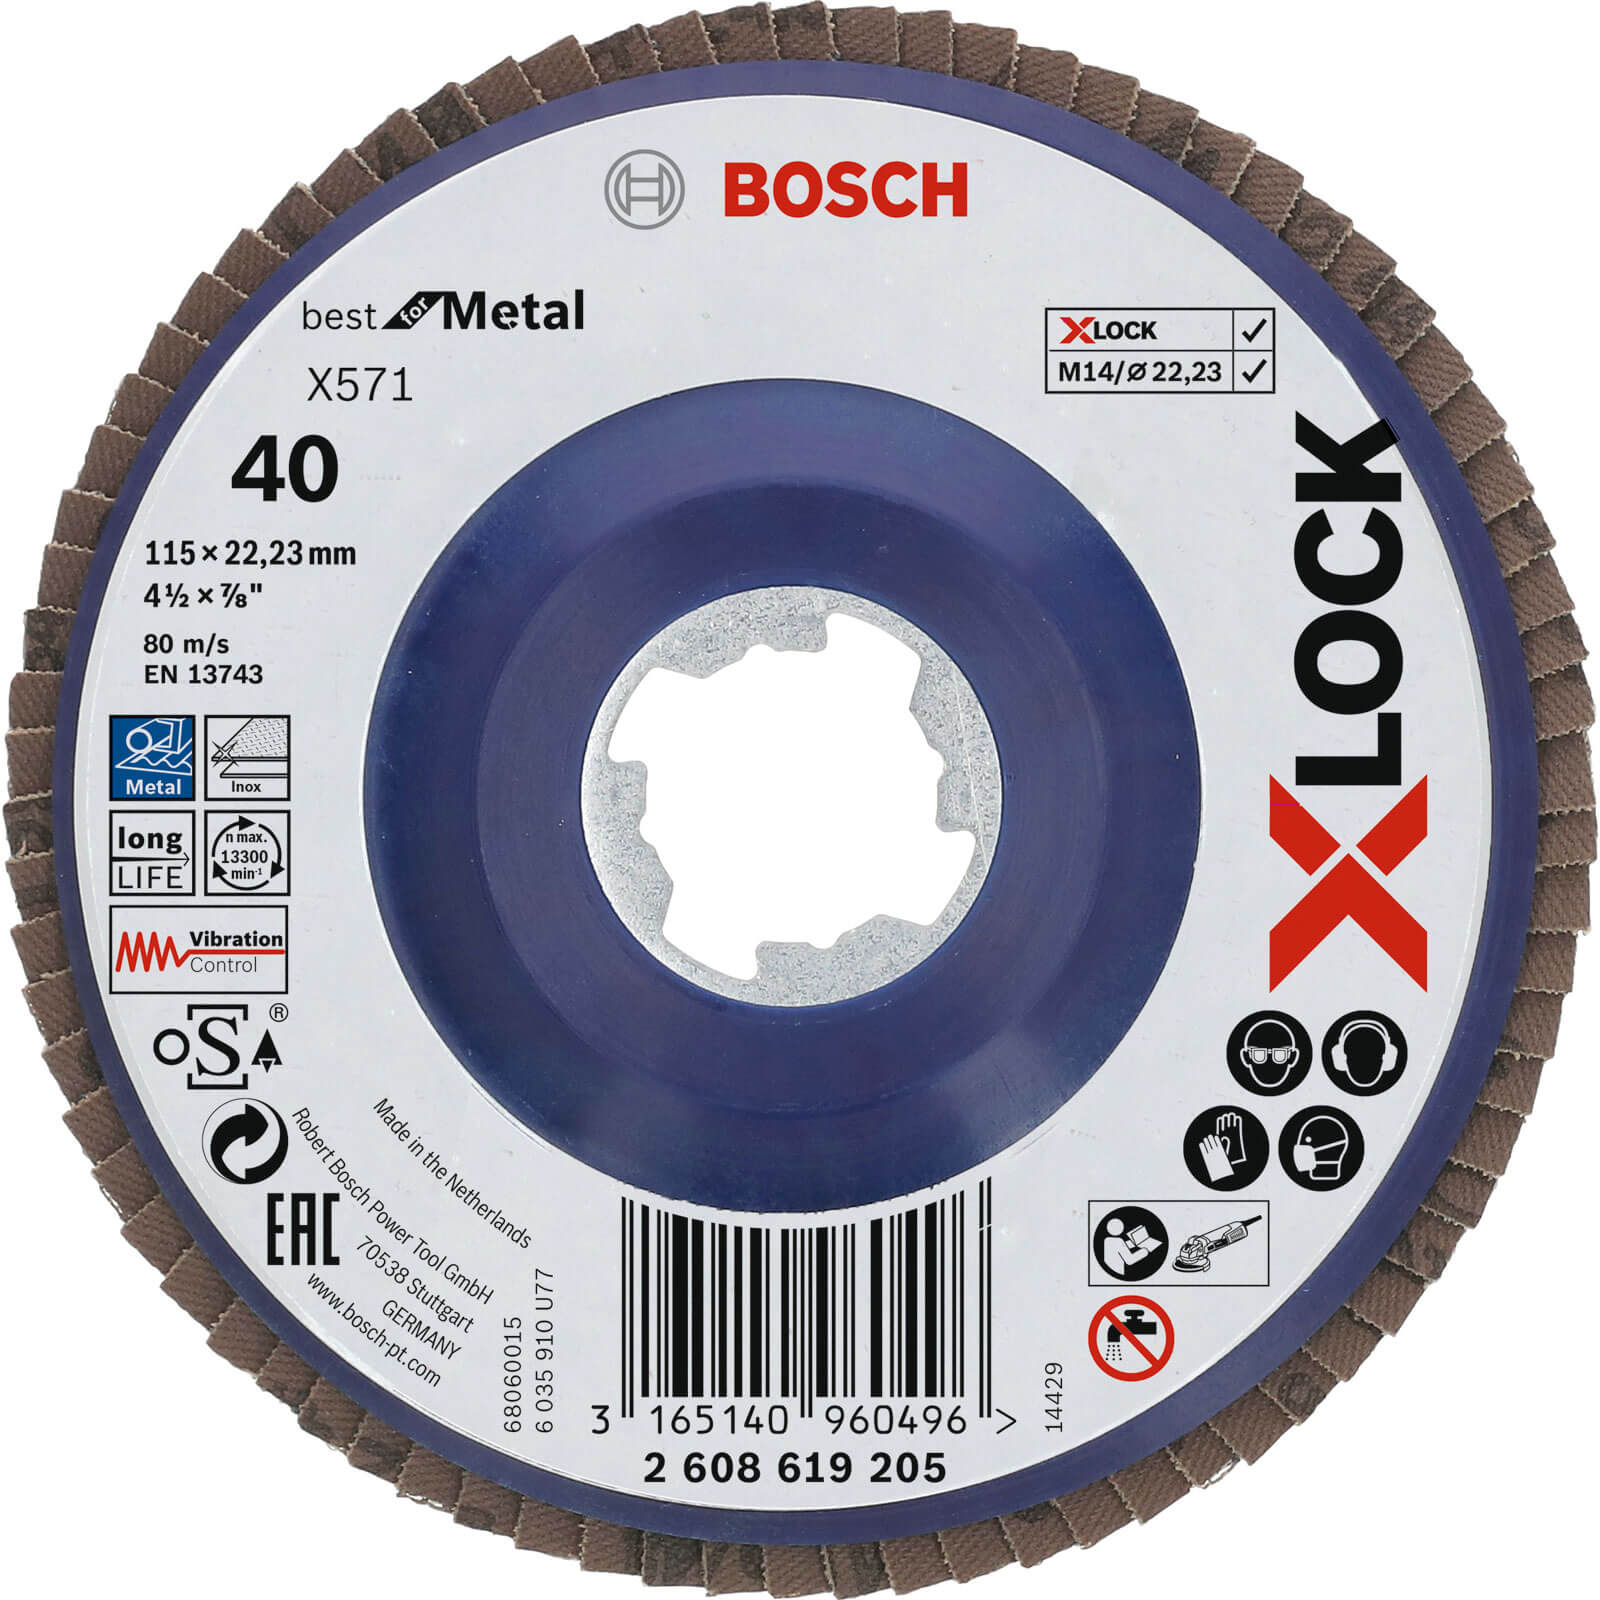 Image of Bosch X Lock Zirconium Abrasive Straight Flap Disc 115mm 40g Pack of 1